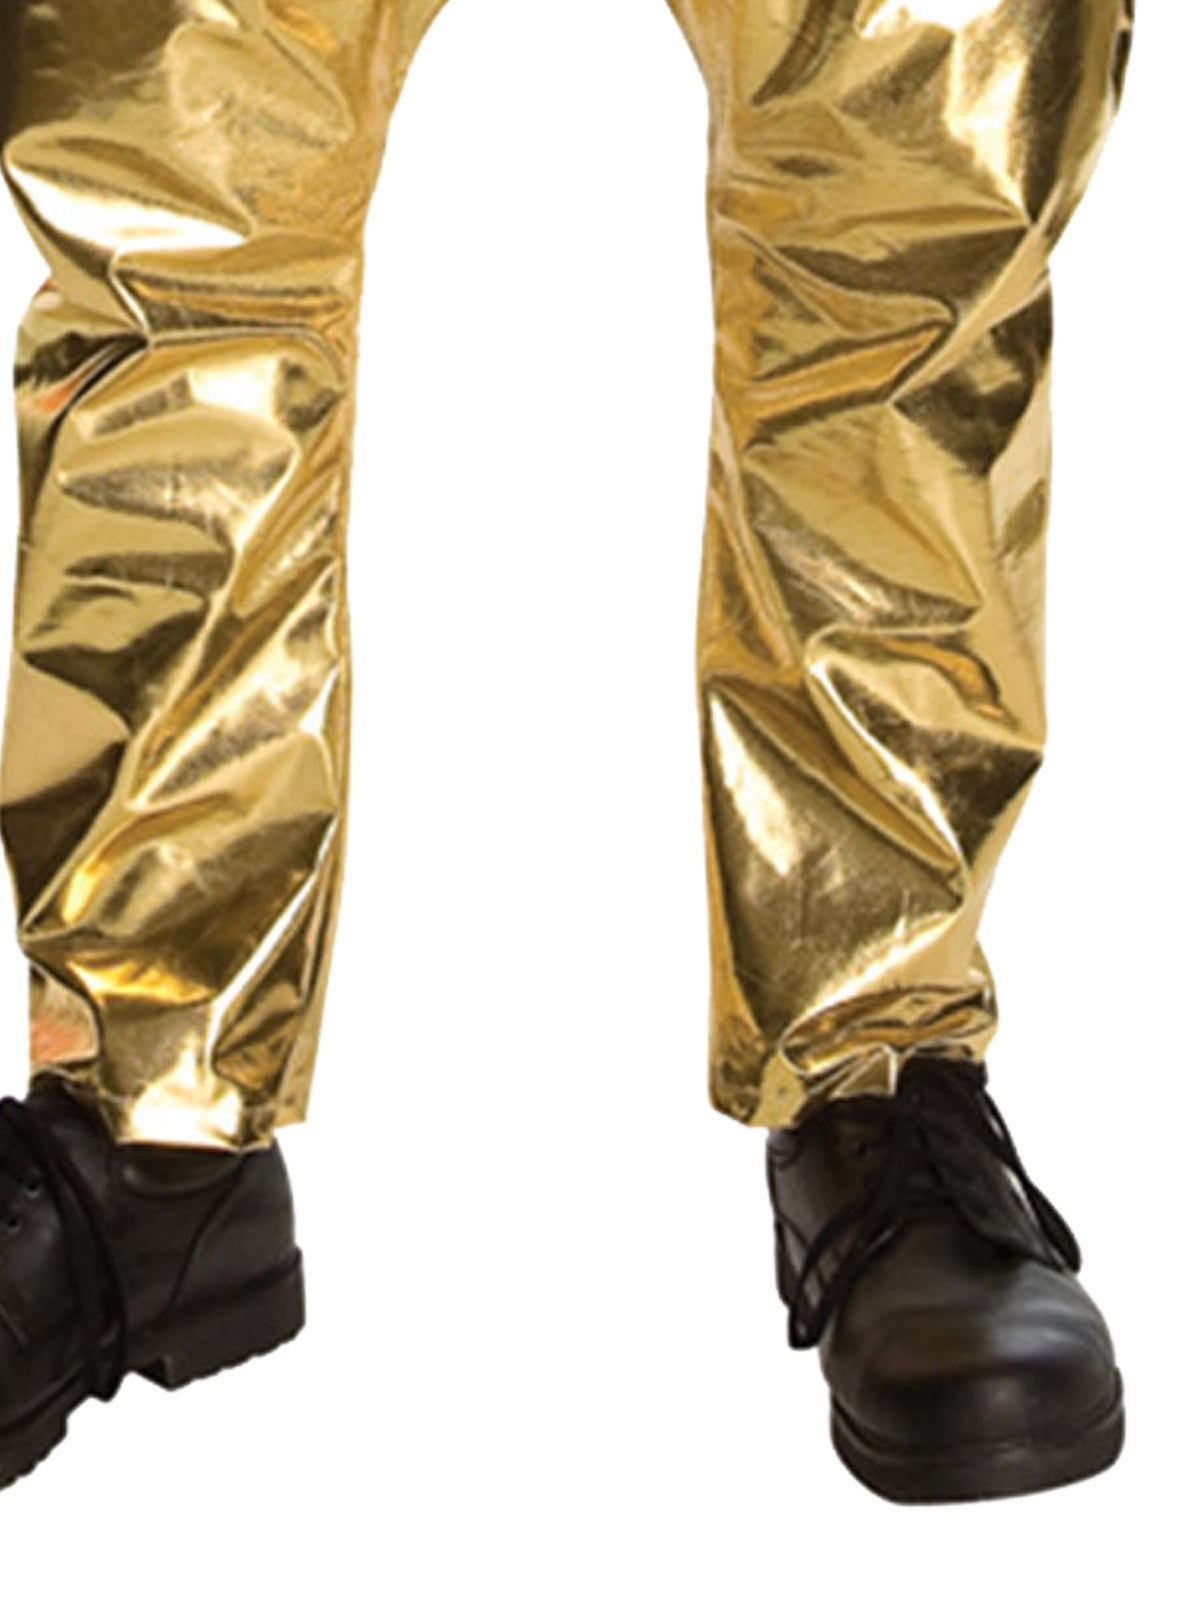 Rapper Gold Pants 90's Rapper Adult Men's Costume